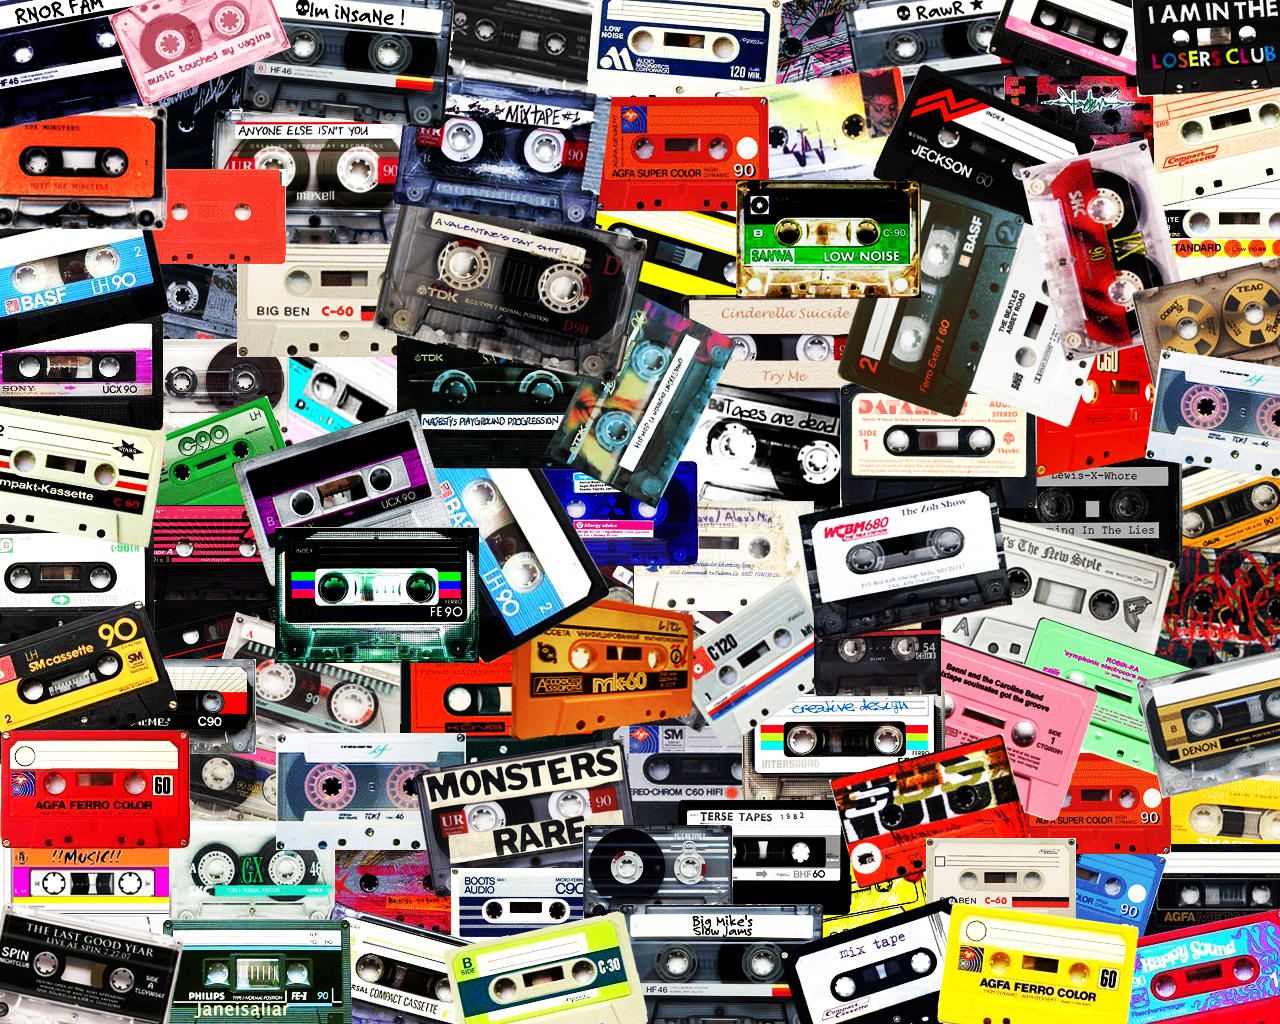 The 8 best tape decks for home listening